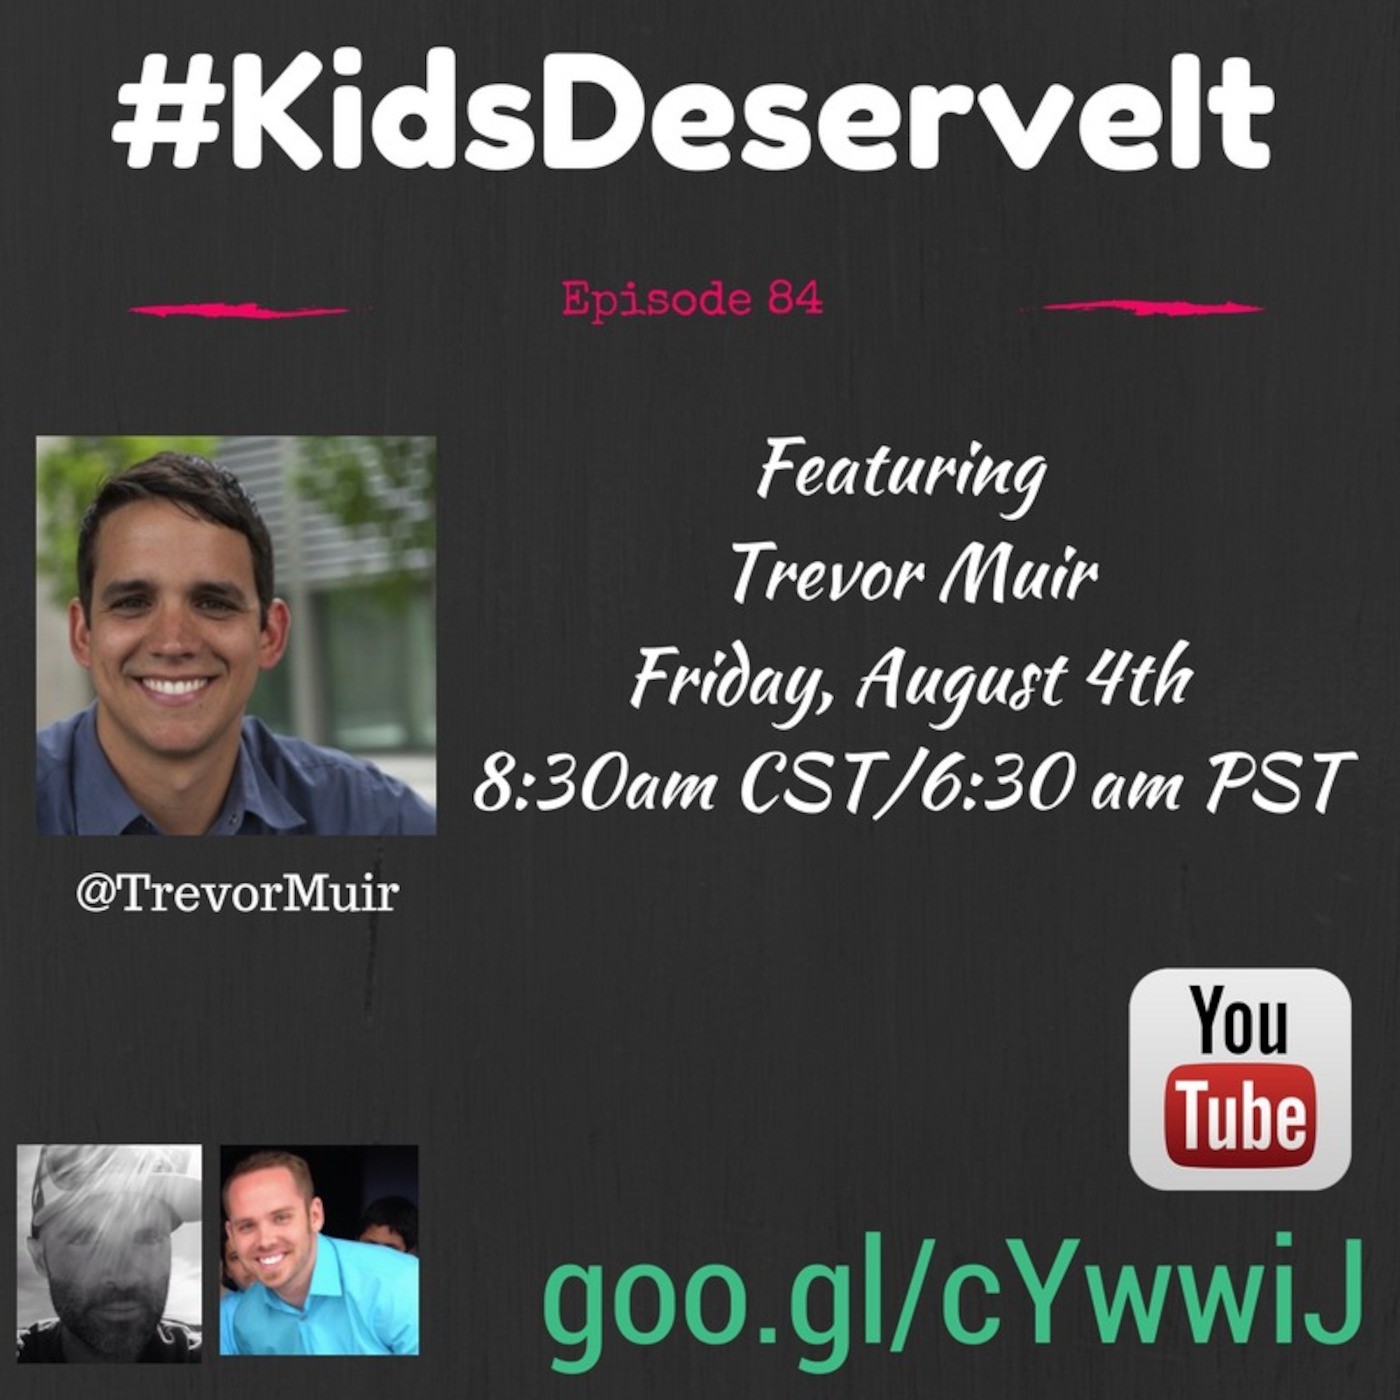 Episode 84 of #KidsDeserveIt with Trevor Muir